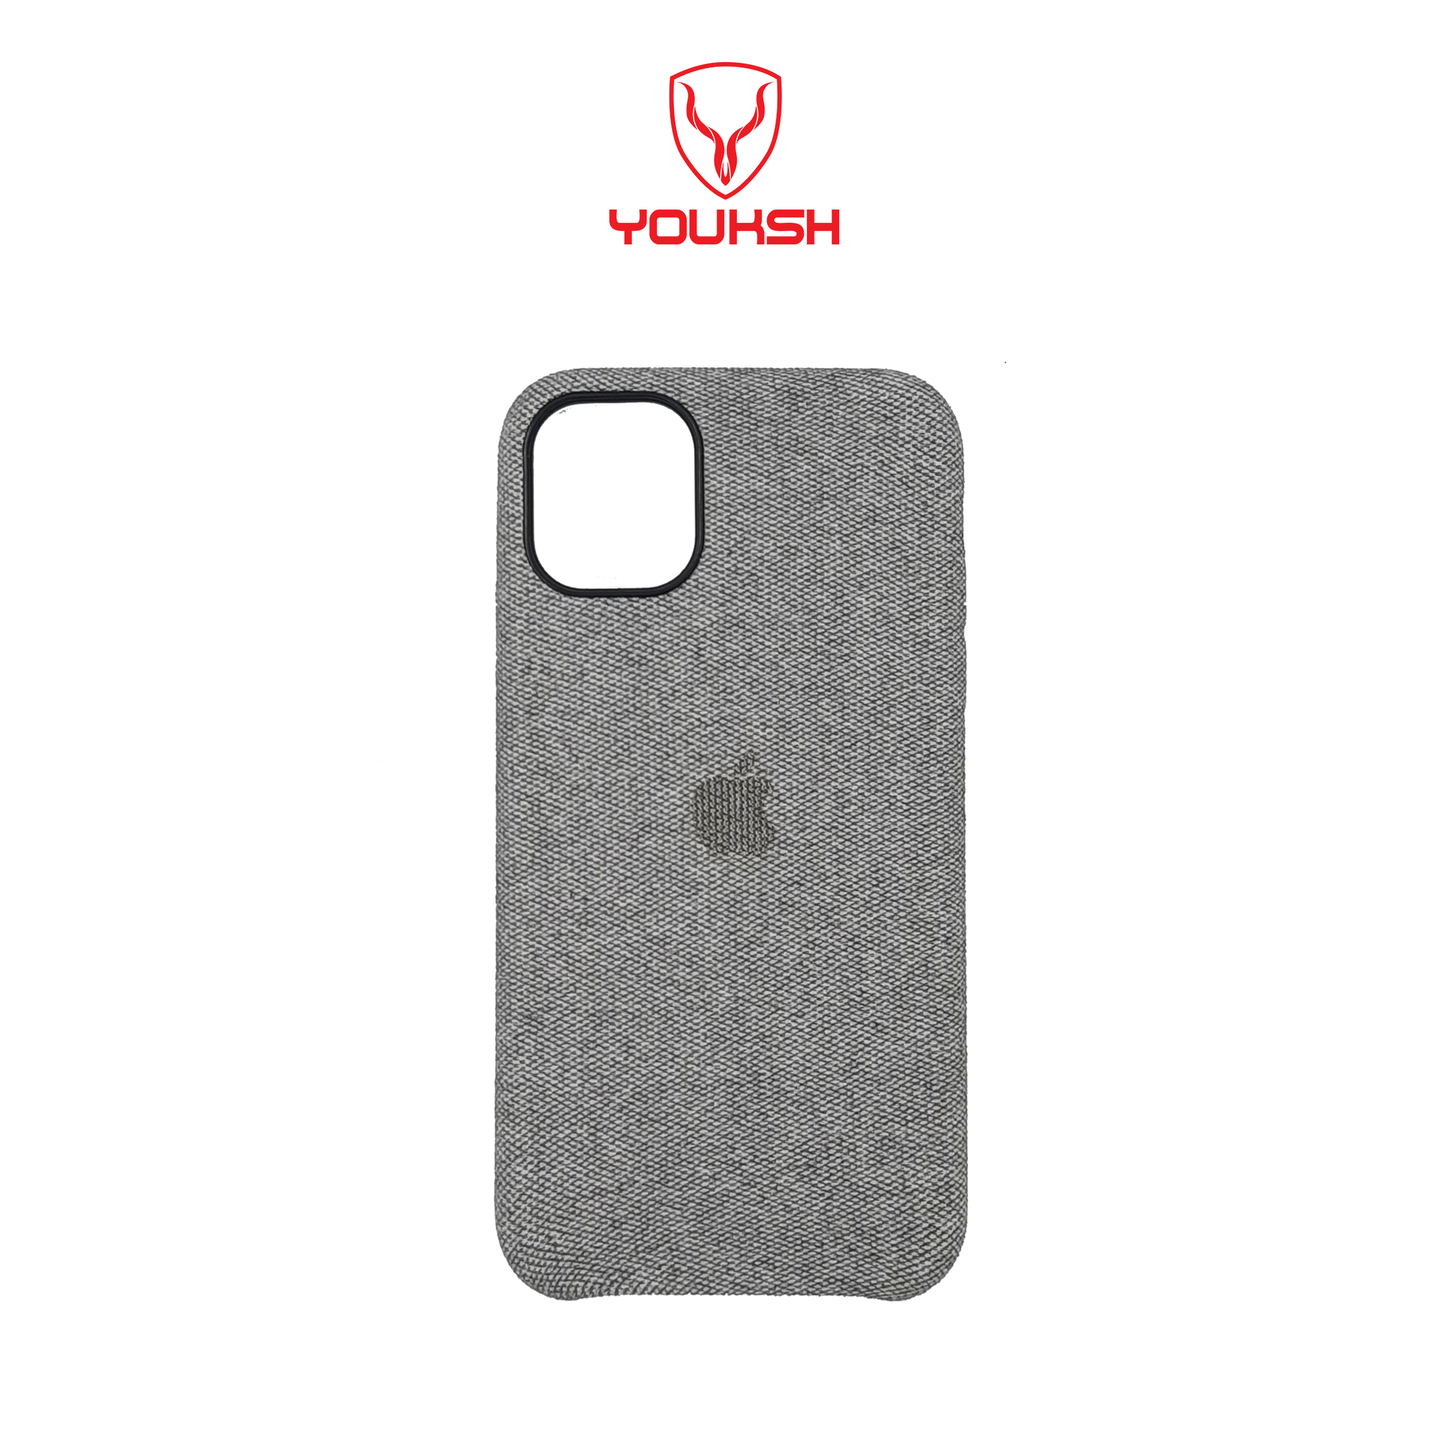 Apple iphone 12 Pro - Youksh Canvas Case - Hot Popular Phone Case.